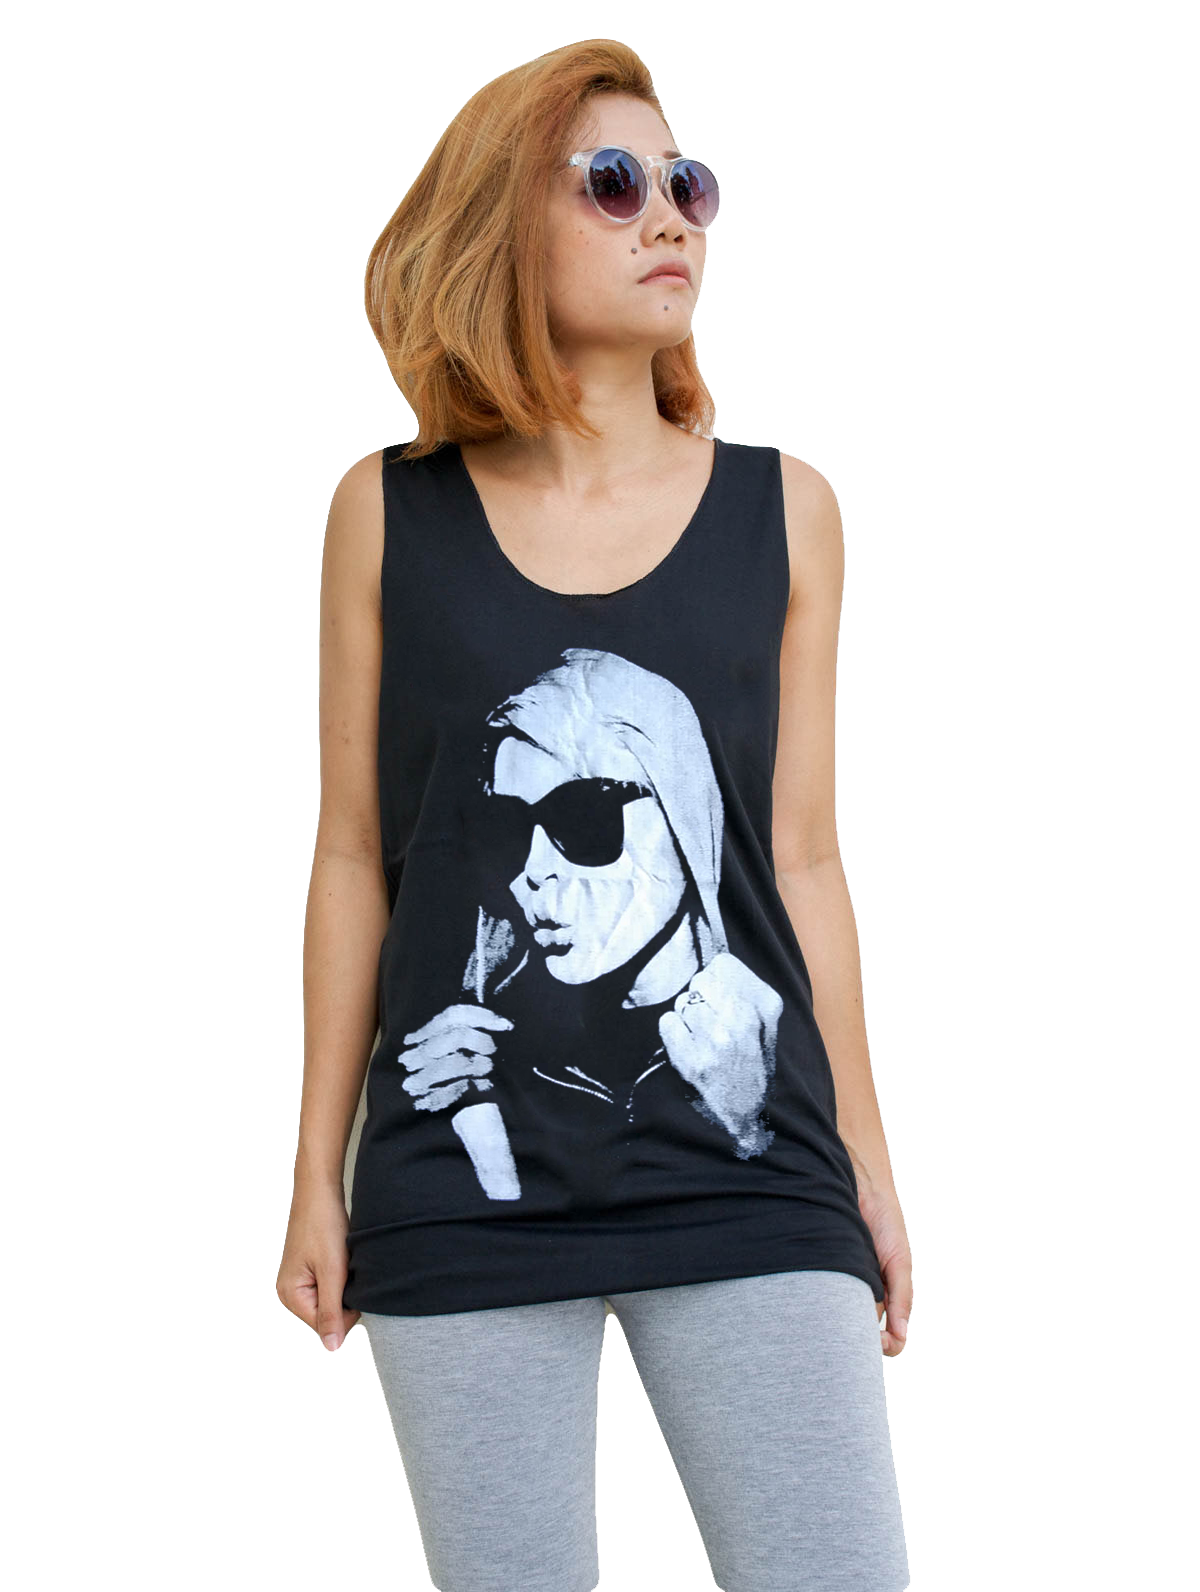 Unisex Blondie Debbie Harry Tank-Top Singlet vest Sleeveless T-shirt